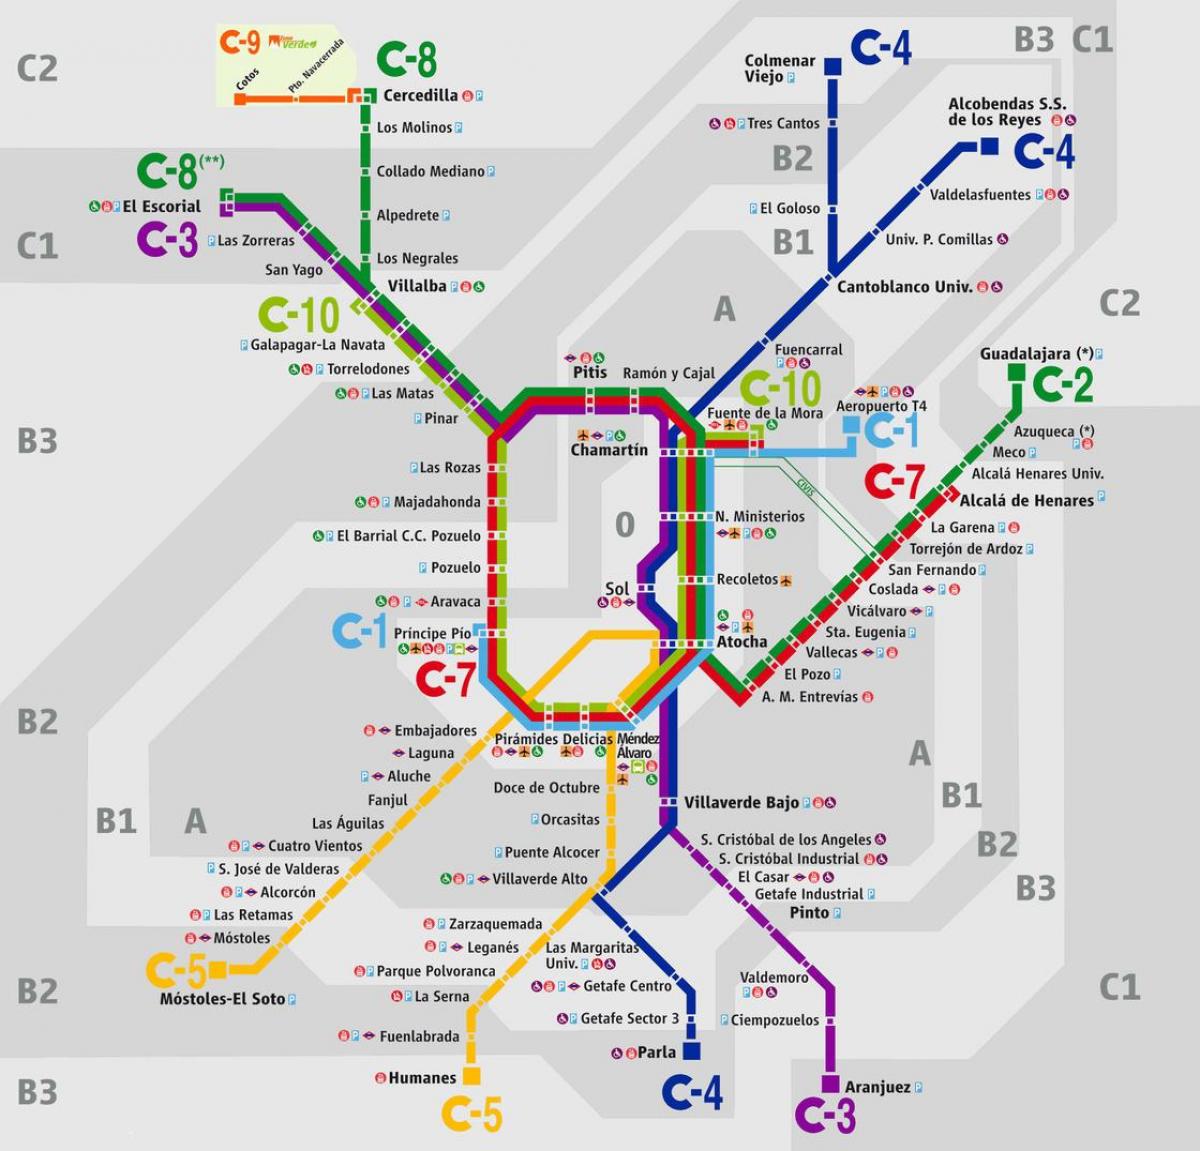 kort over Madrid atocha togstation